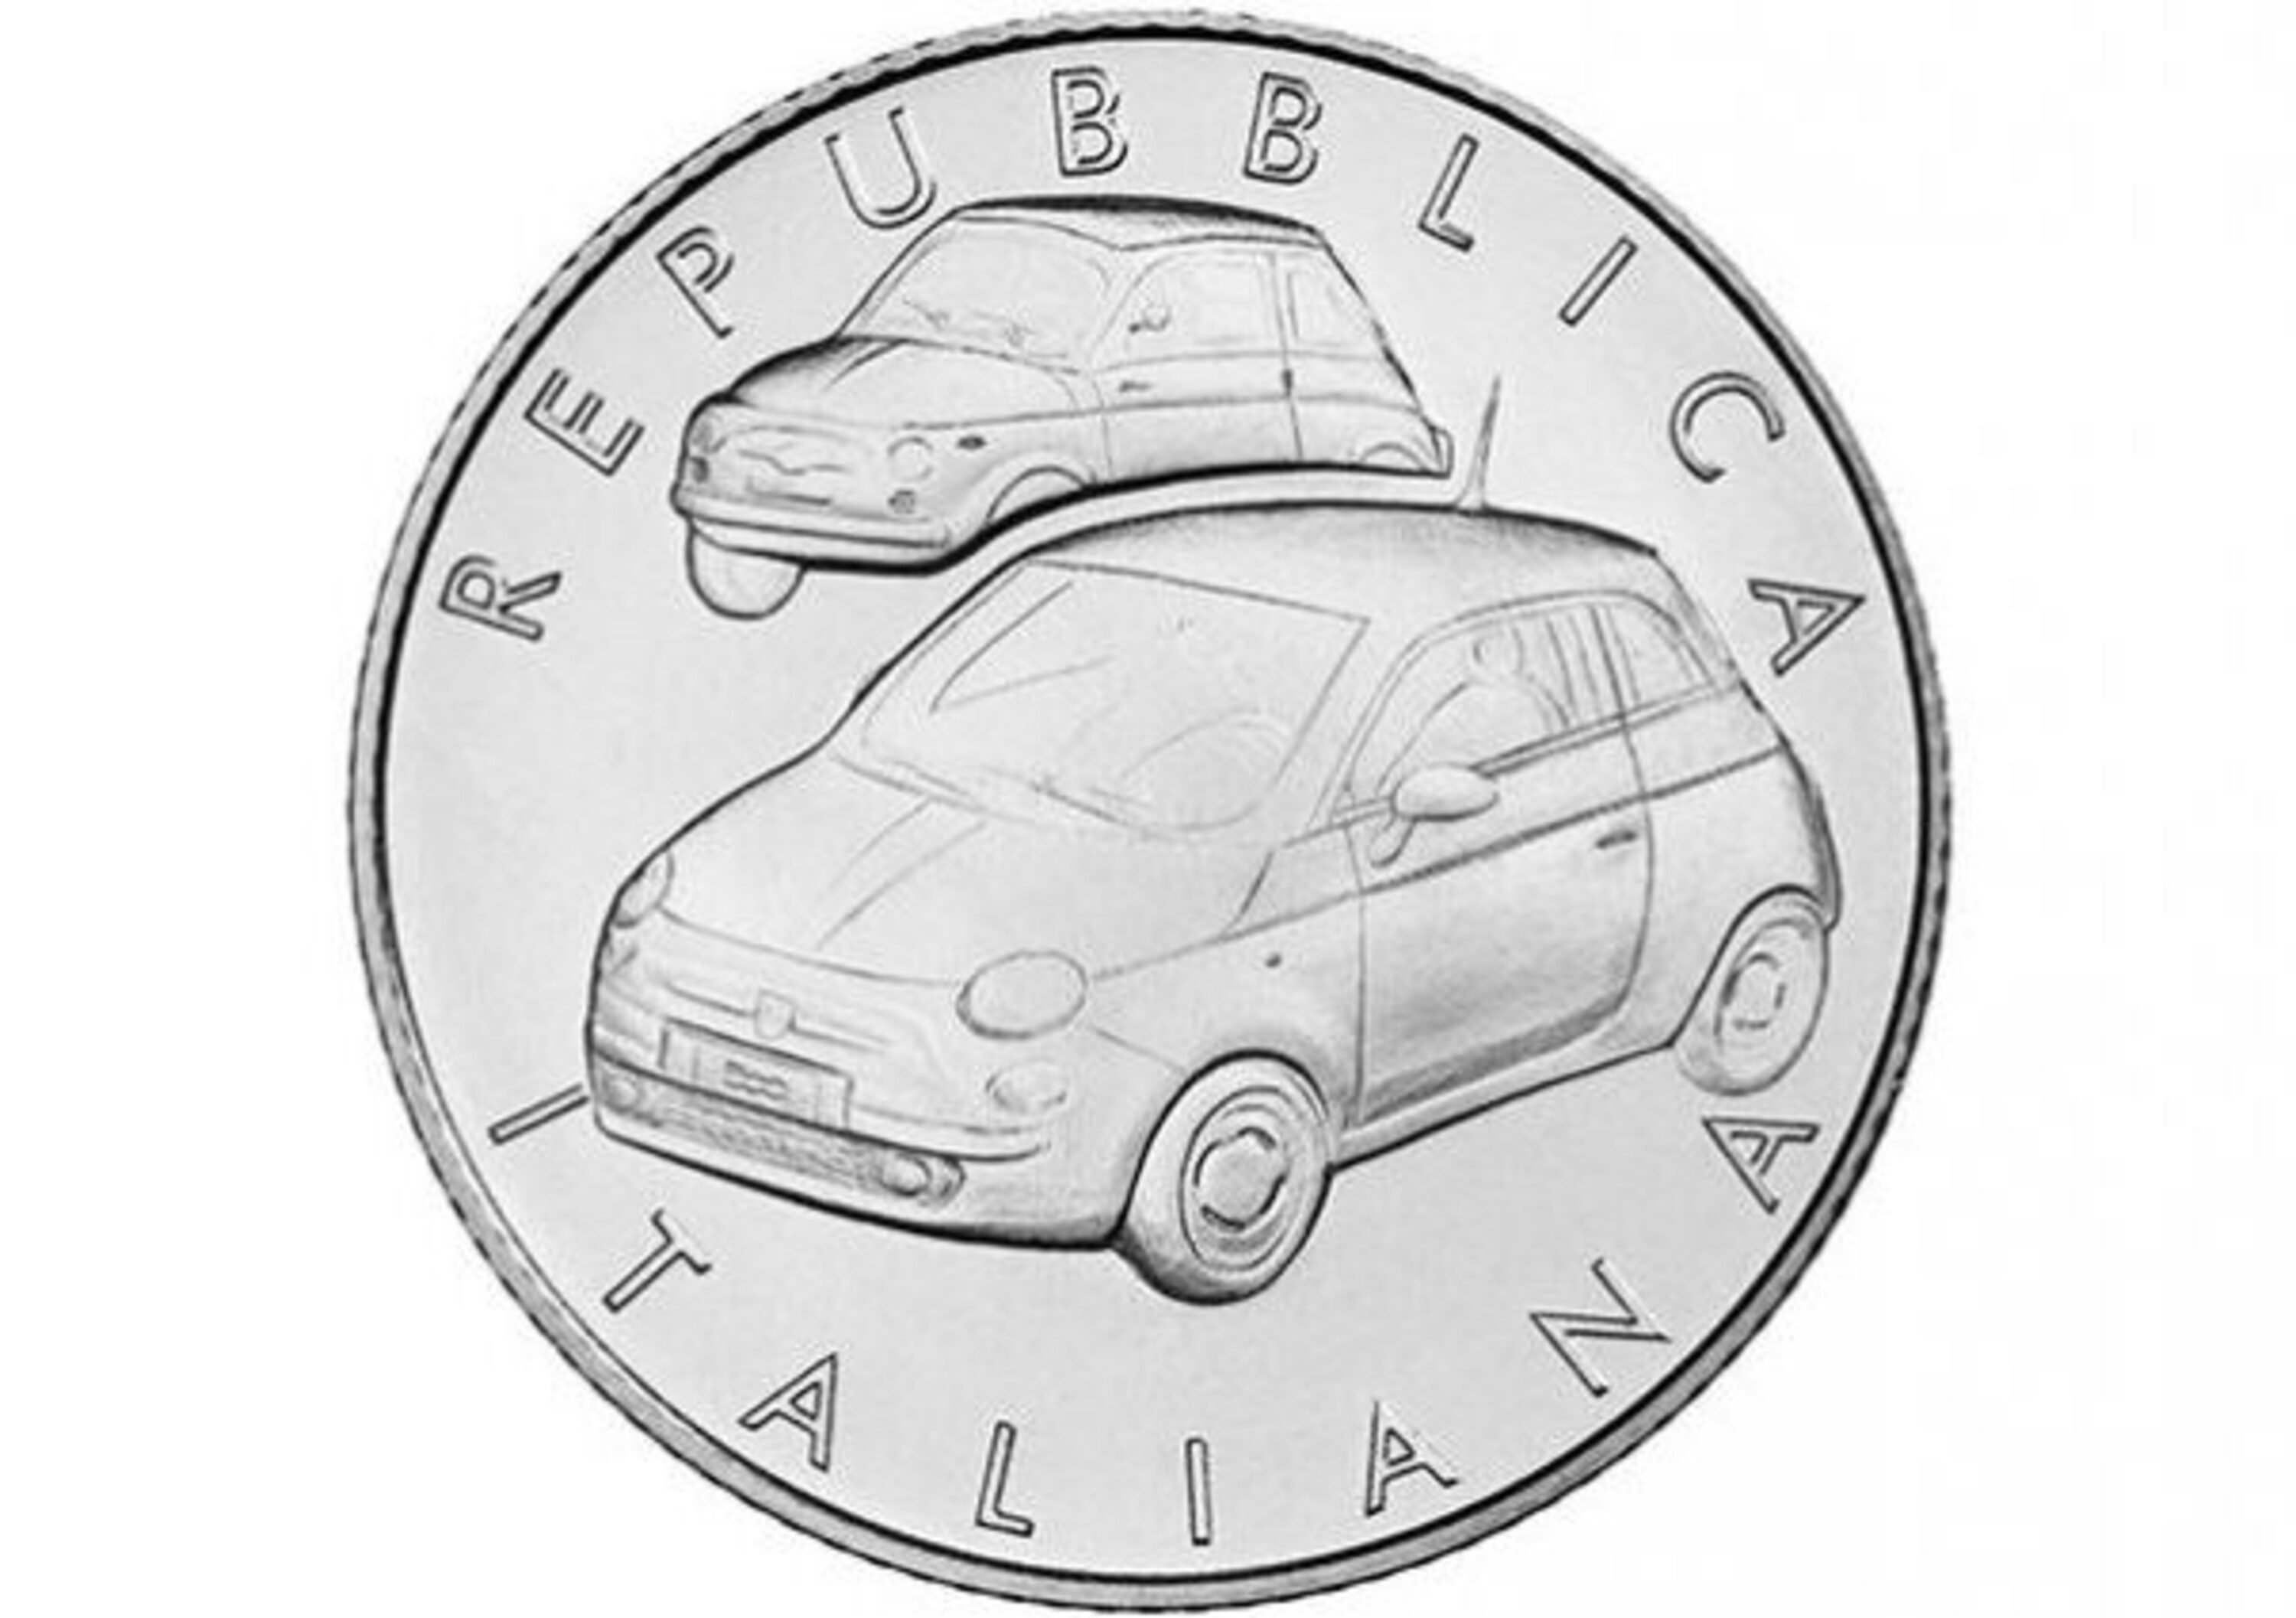 Fiat 500, una moneta celebrativa per i 60 anni